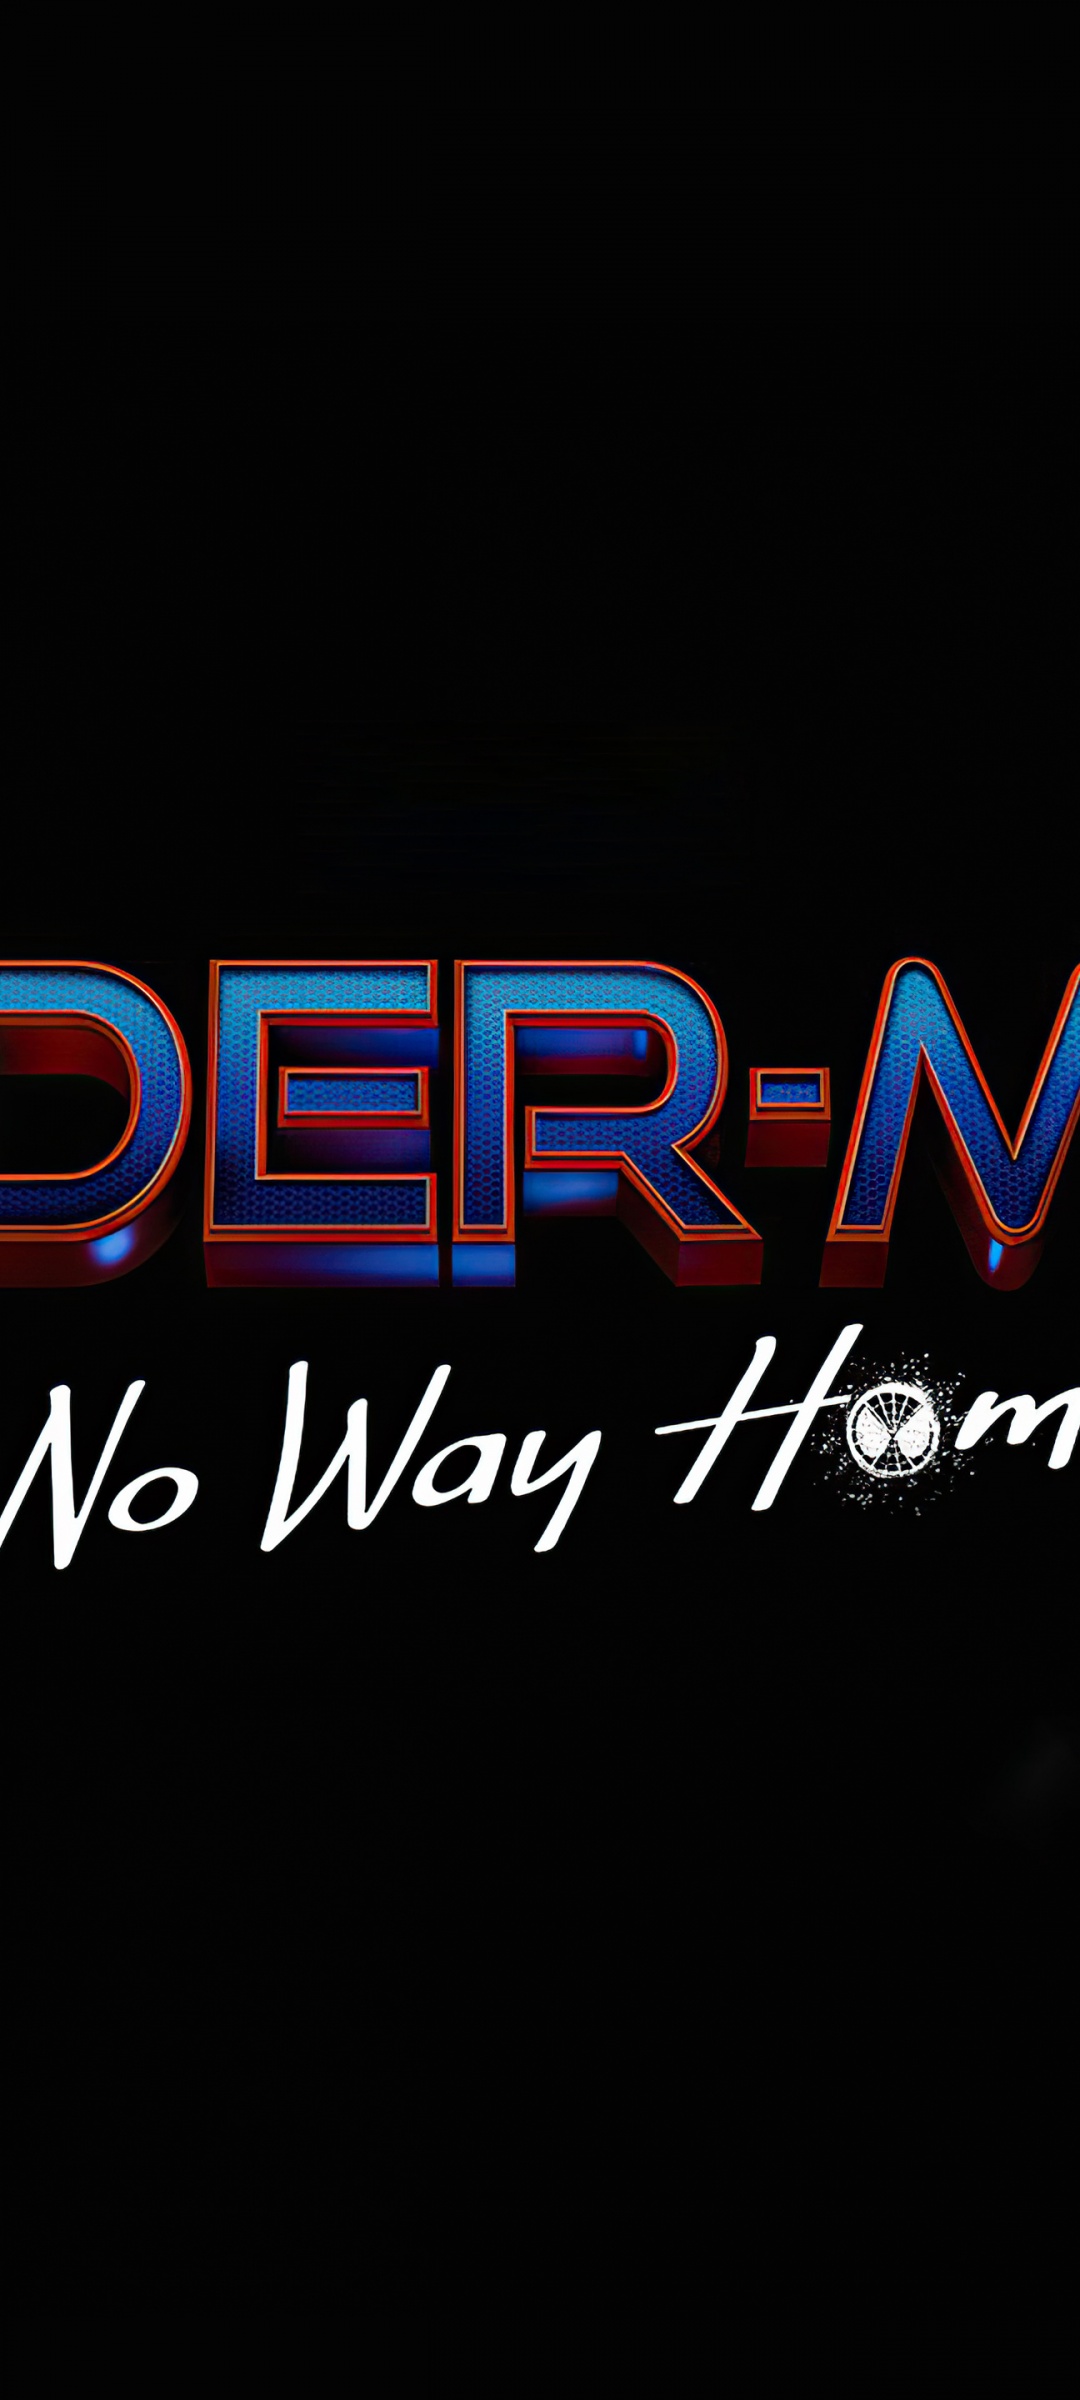 Spider-Man: No Way Home 4K Wallpaper, 2021 Movies, Marvel Comics, 5K